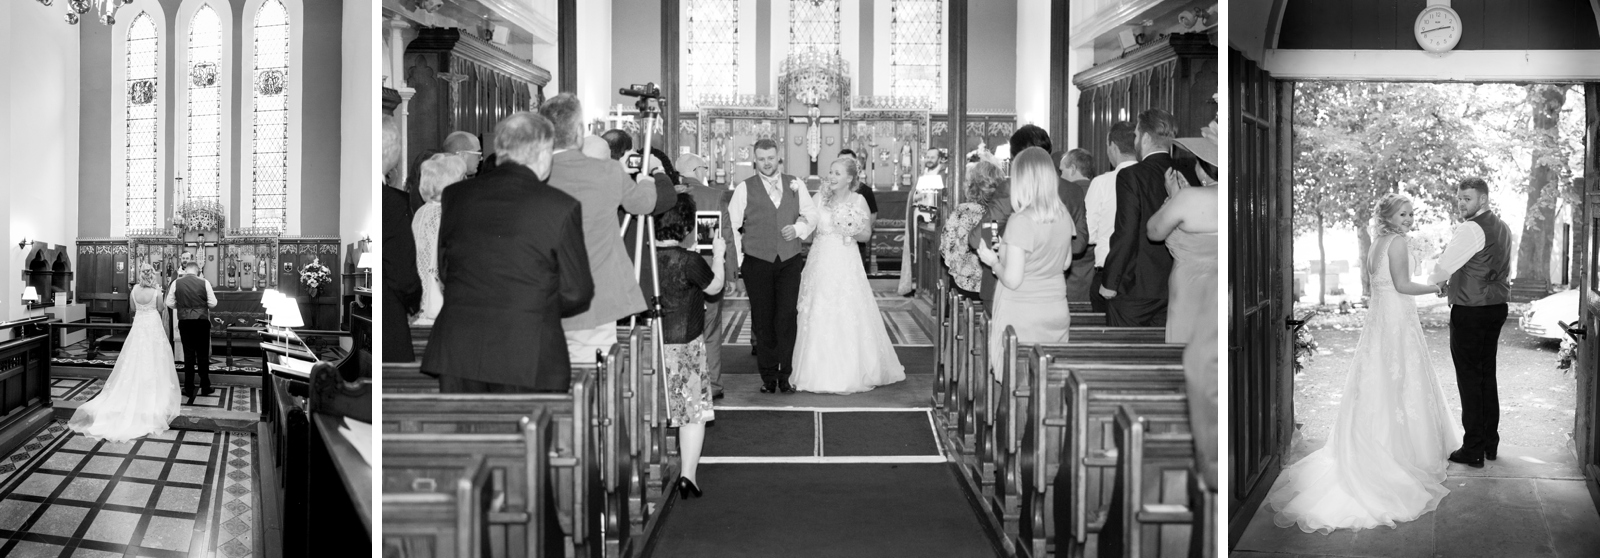 wedding photographer in kent